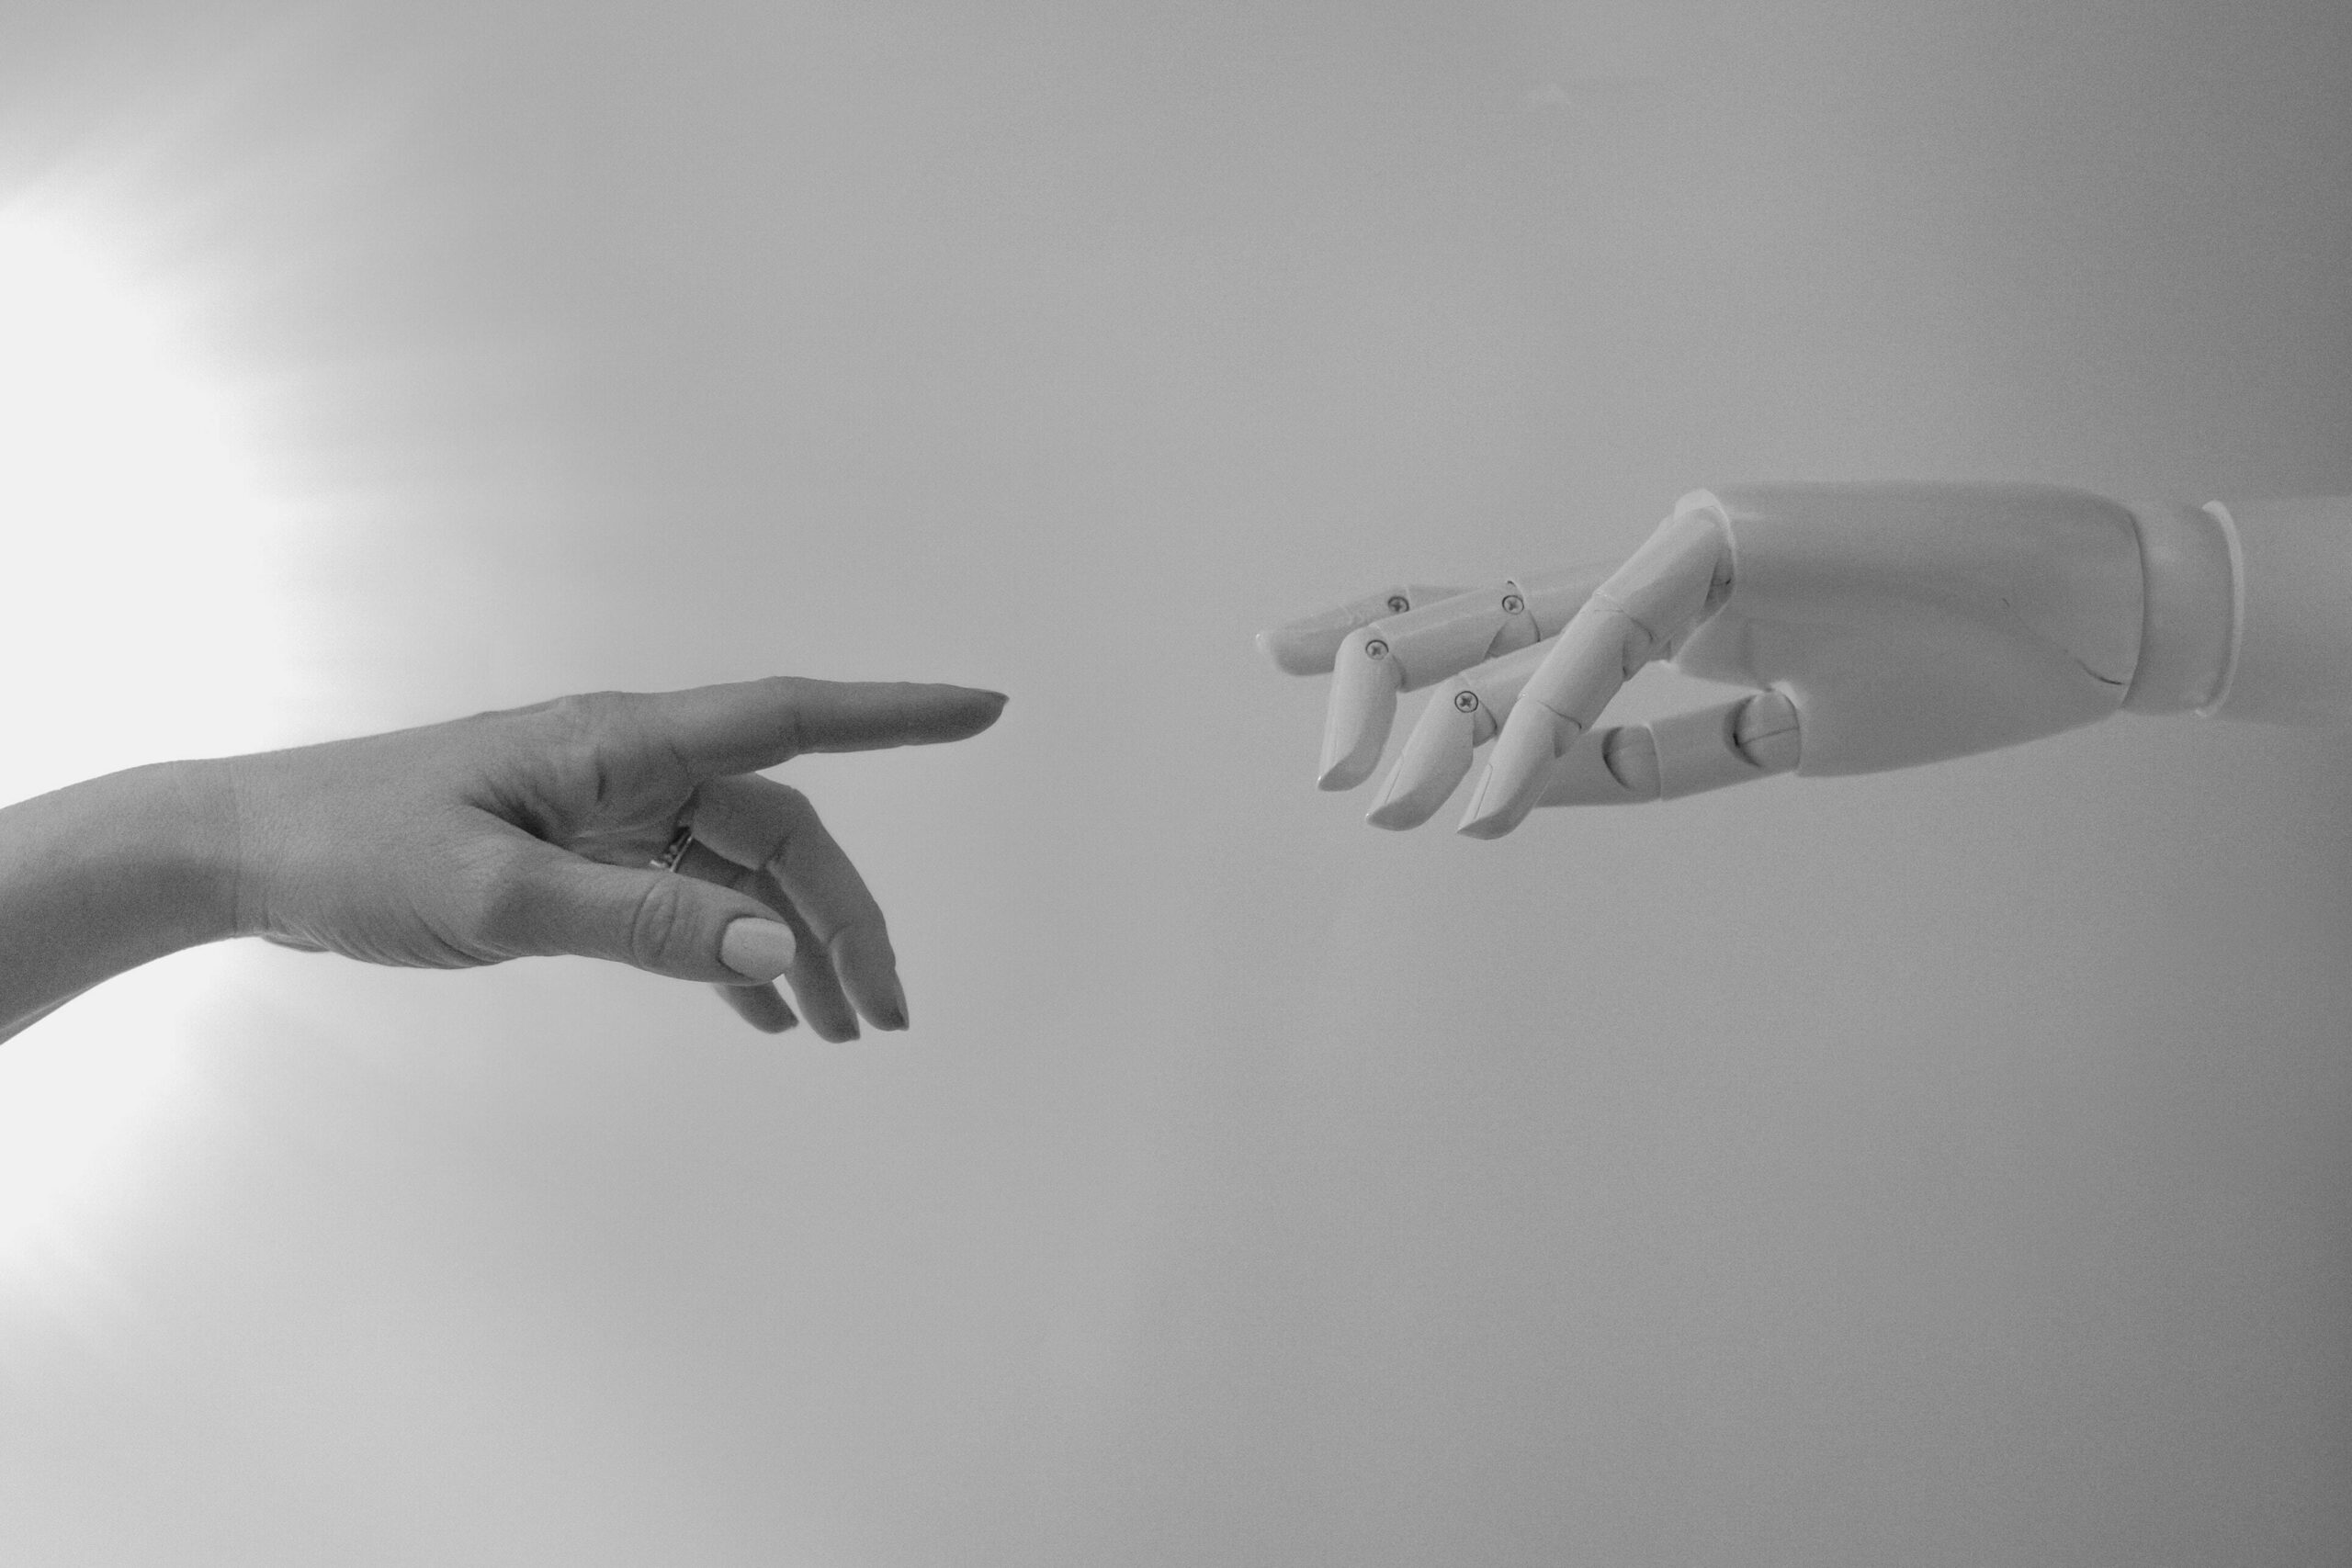 Human hand reaching for robot hand